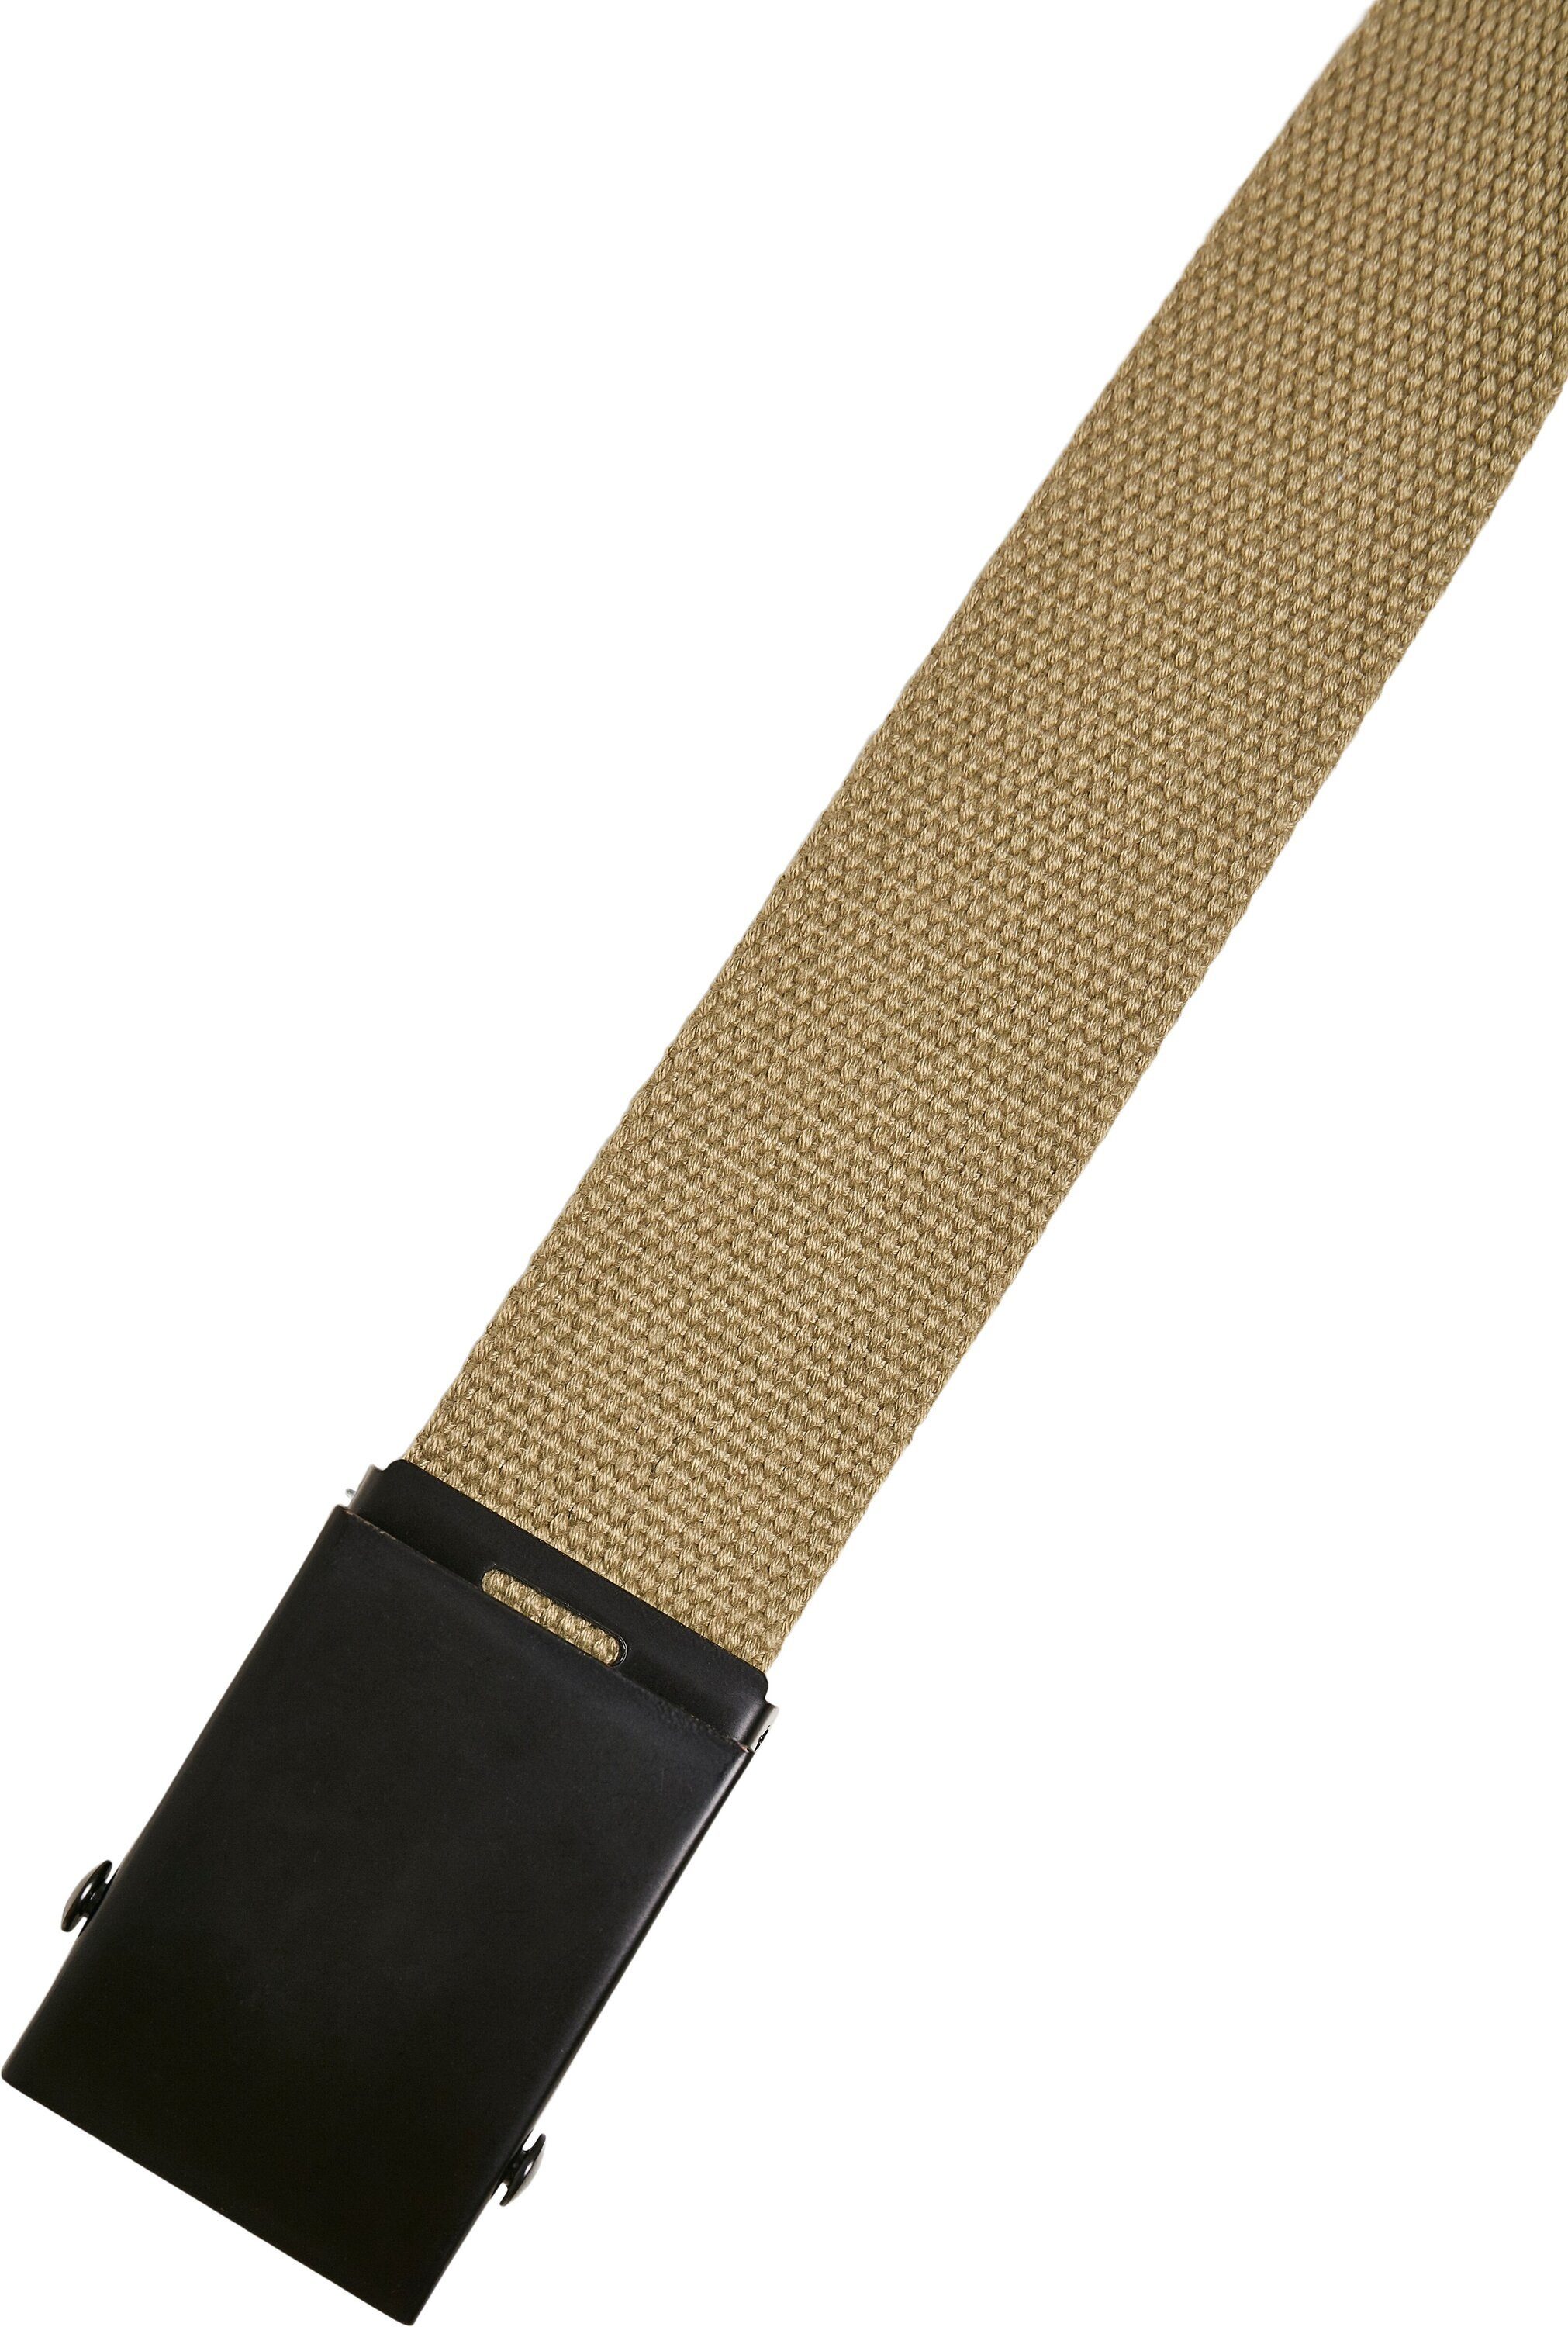 URBAN CLASSICS Hüftgürtel Accessoires Check Belt olive-black Canvas And Solid 2-Pack